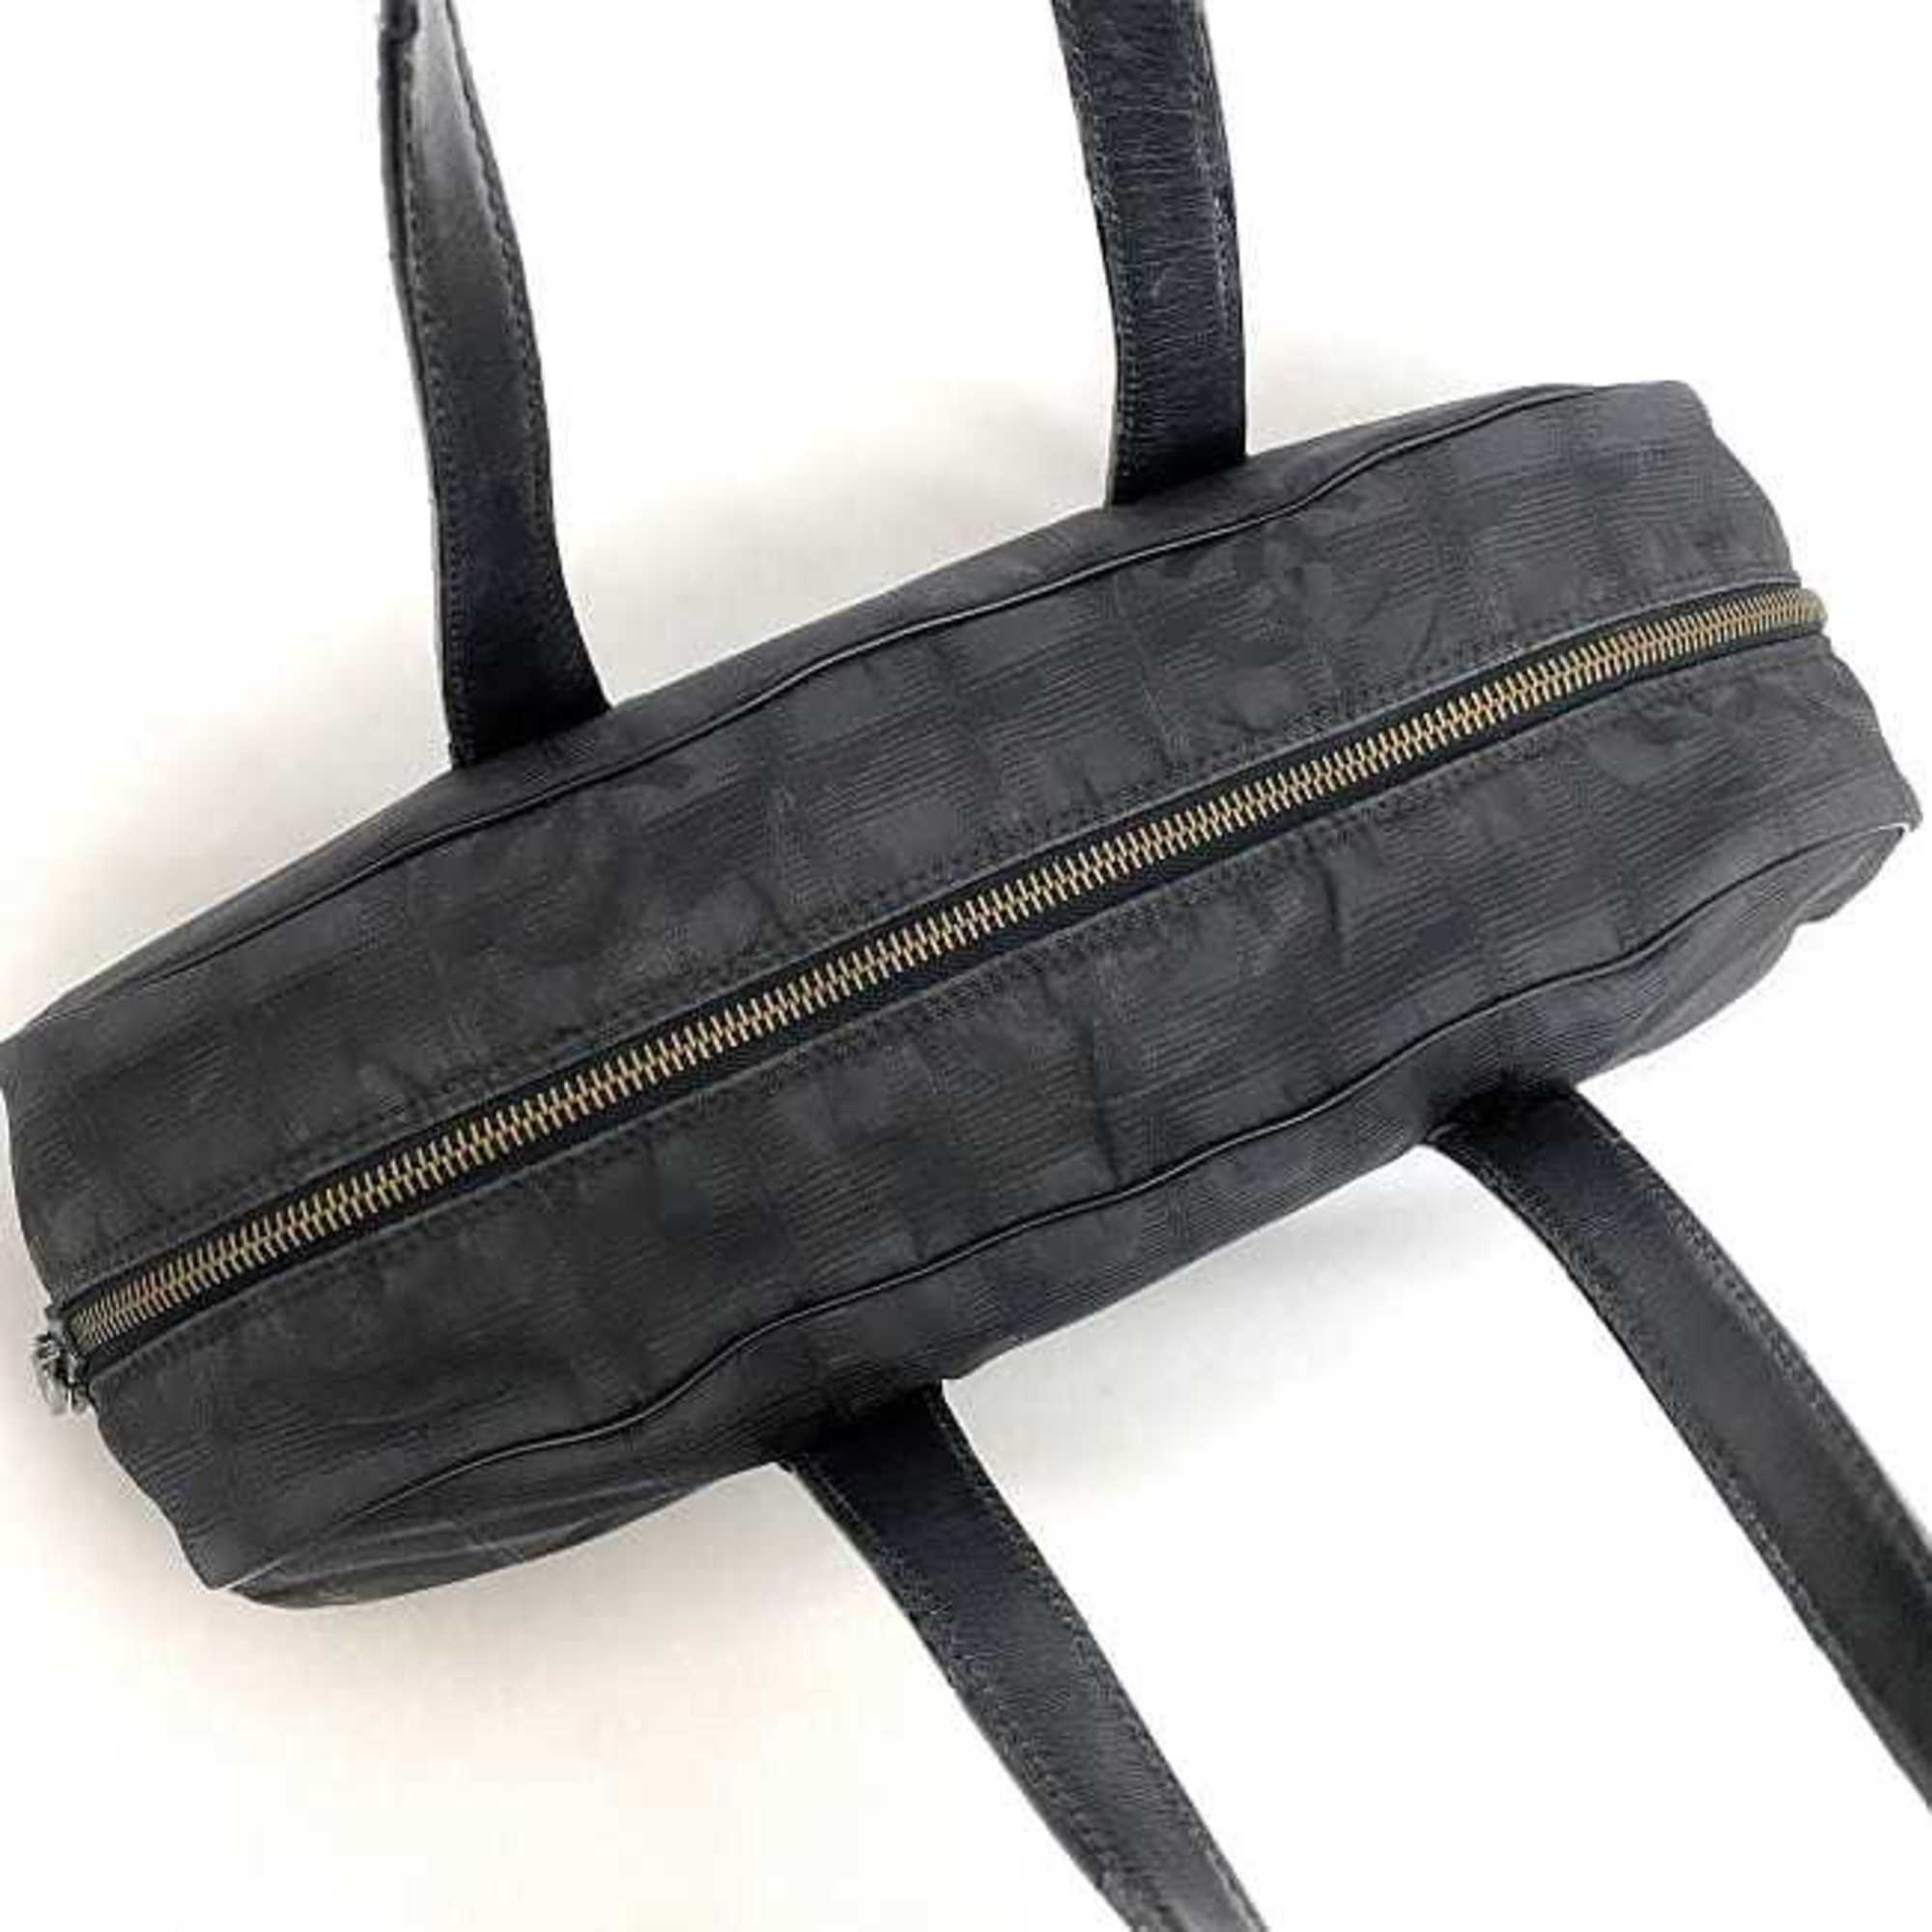 Chanel Boston Bag Black New A15828 Cocomark Nylon Leather 6th CHANEL Nutra Horizontal Ladies